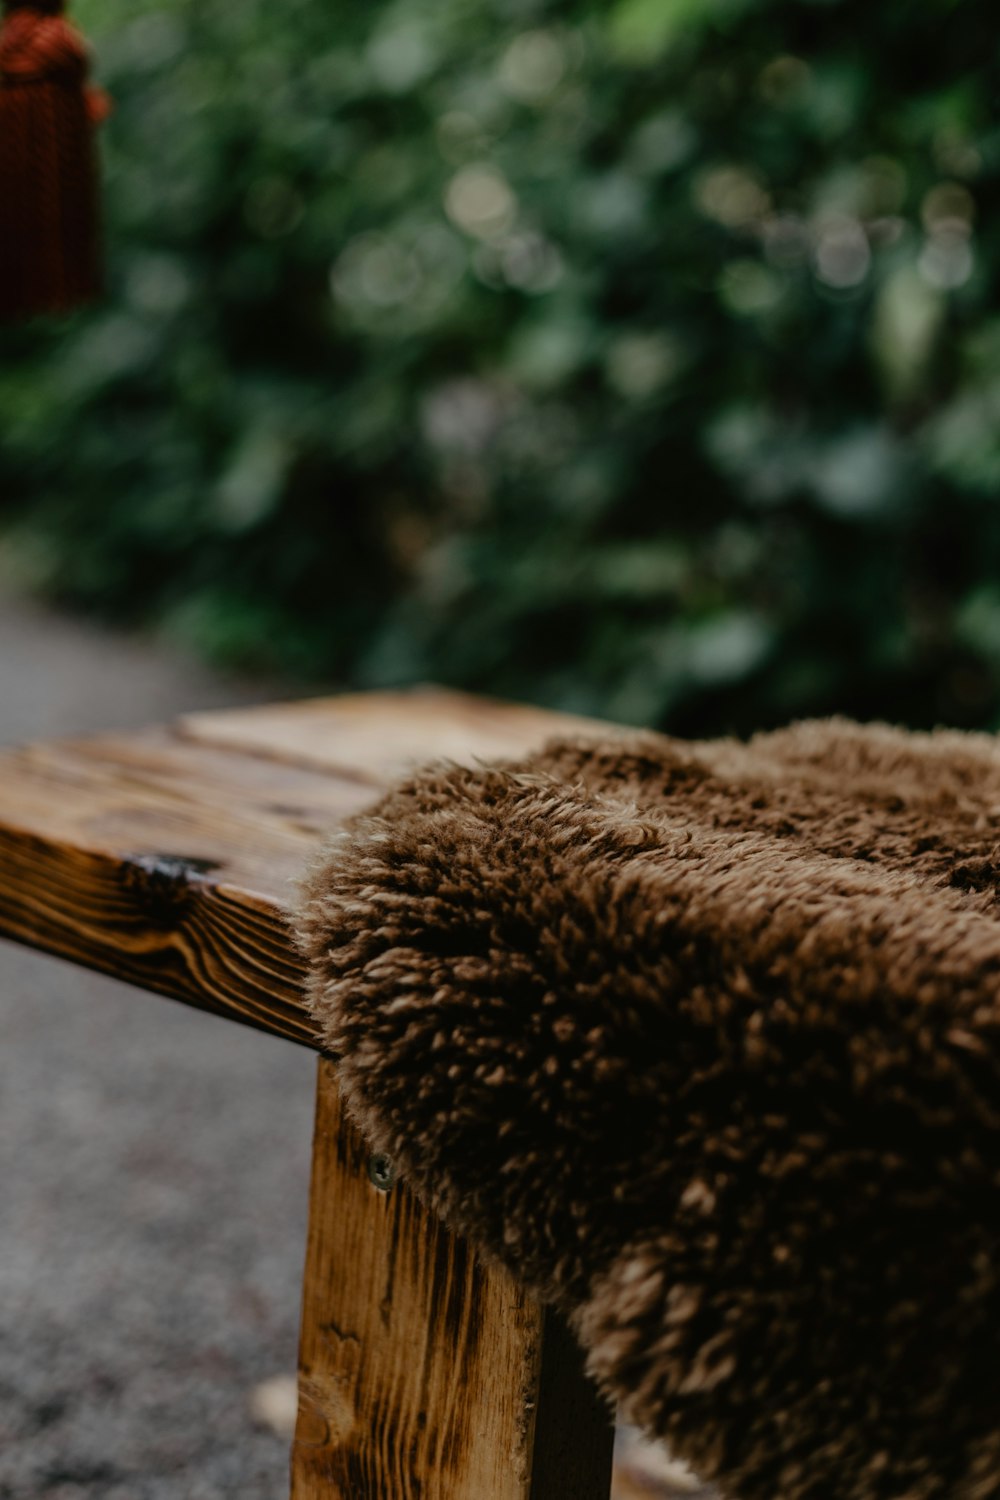 a teddy bear sitting on a wooden bench